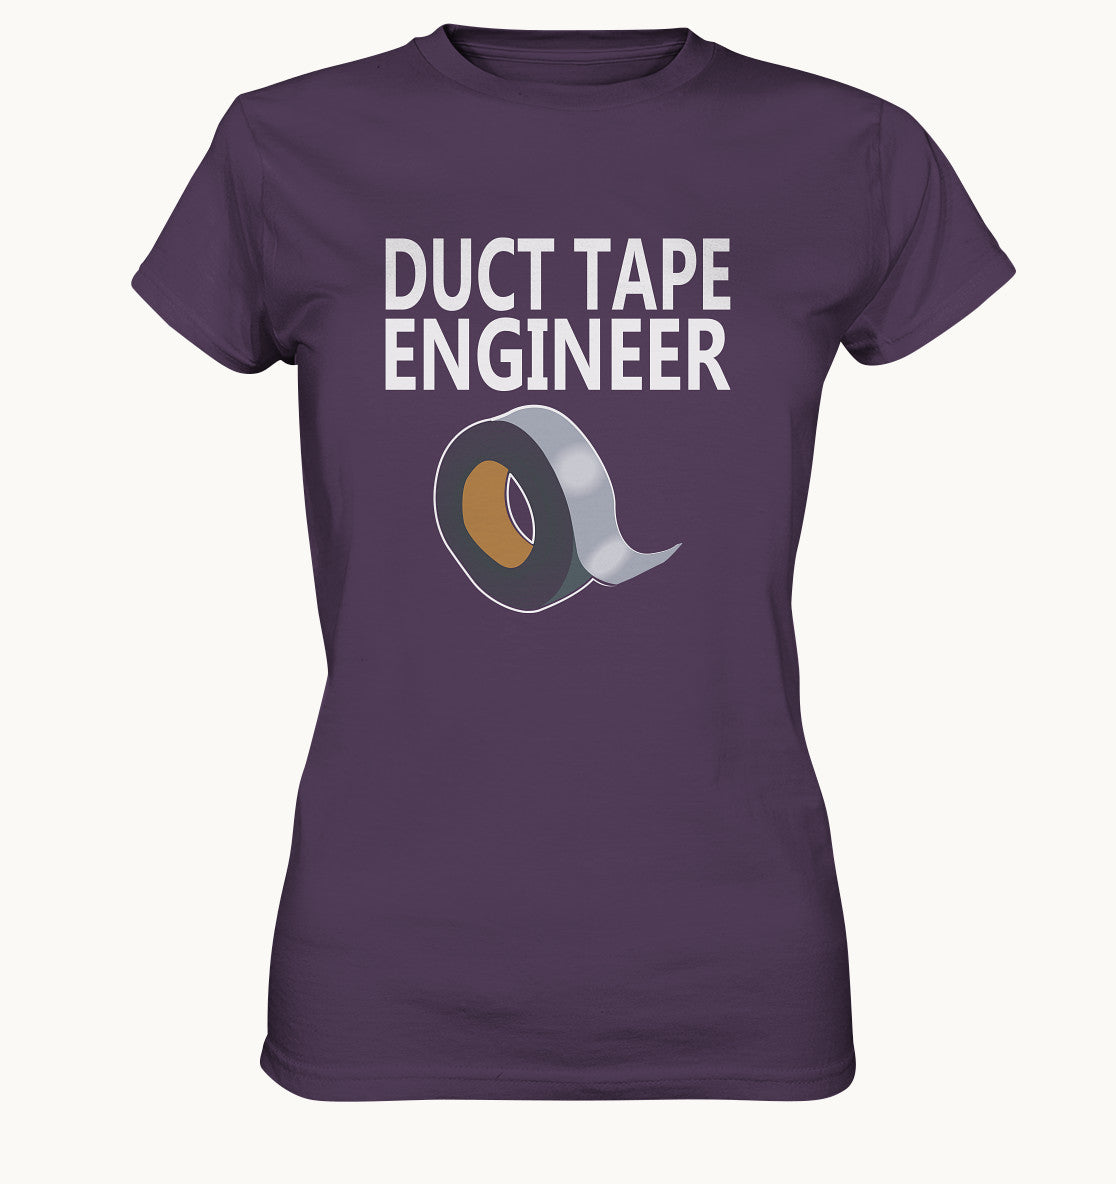 Duct Tape Engineer - Witziges Frauen Shirt